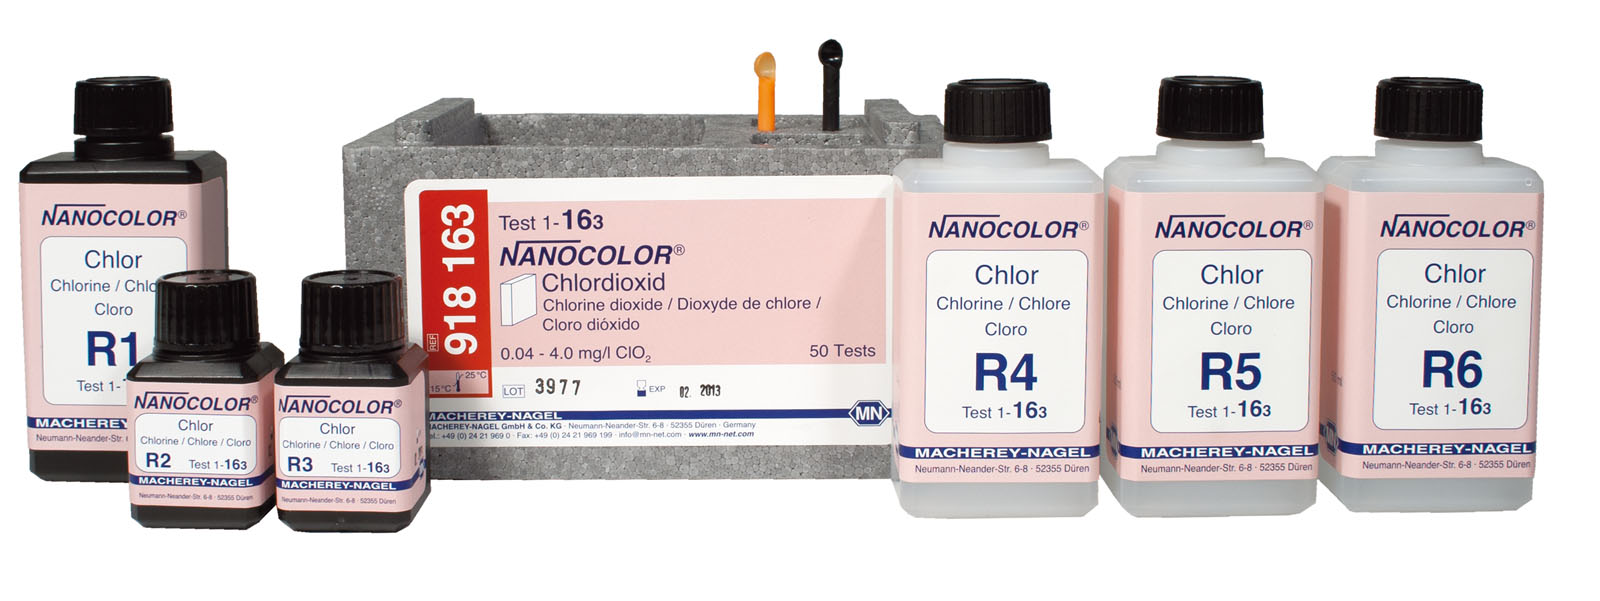 RECK NANOCOLOR Chlordioxid Test